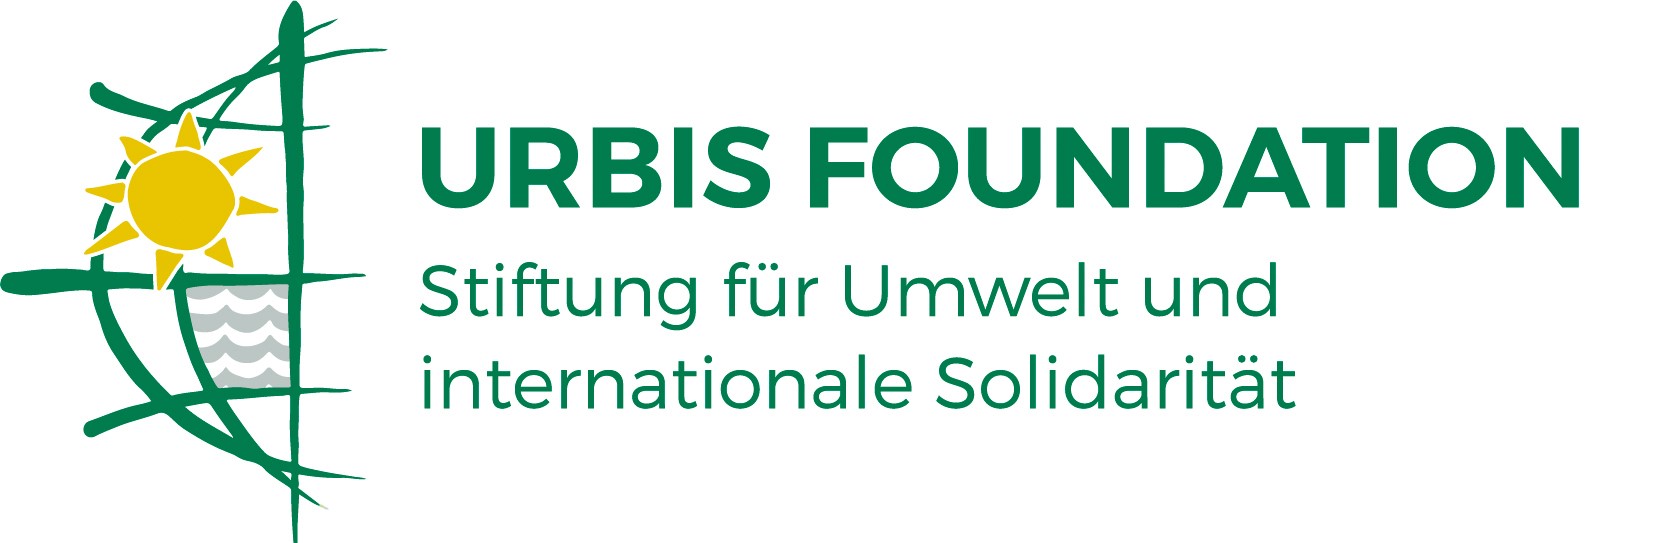 URBIS Foundation